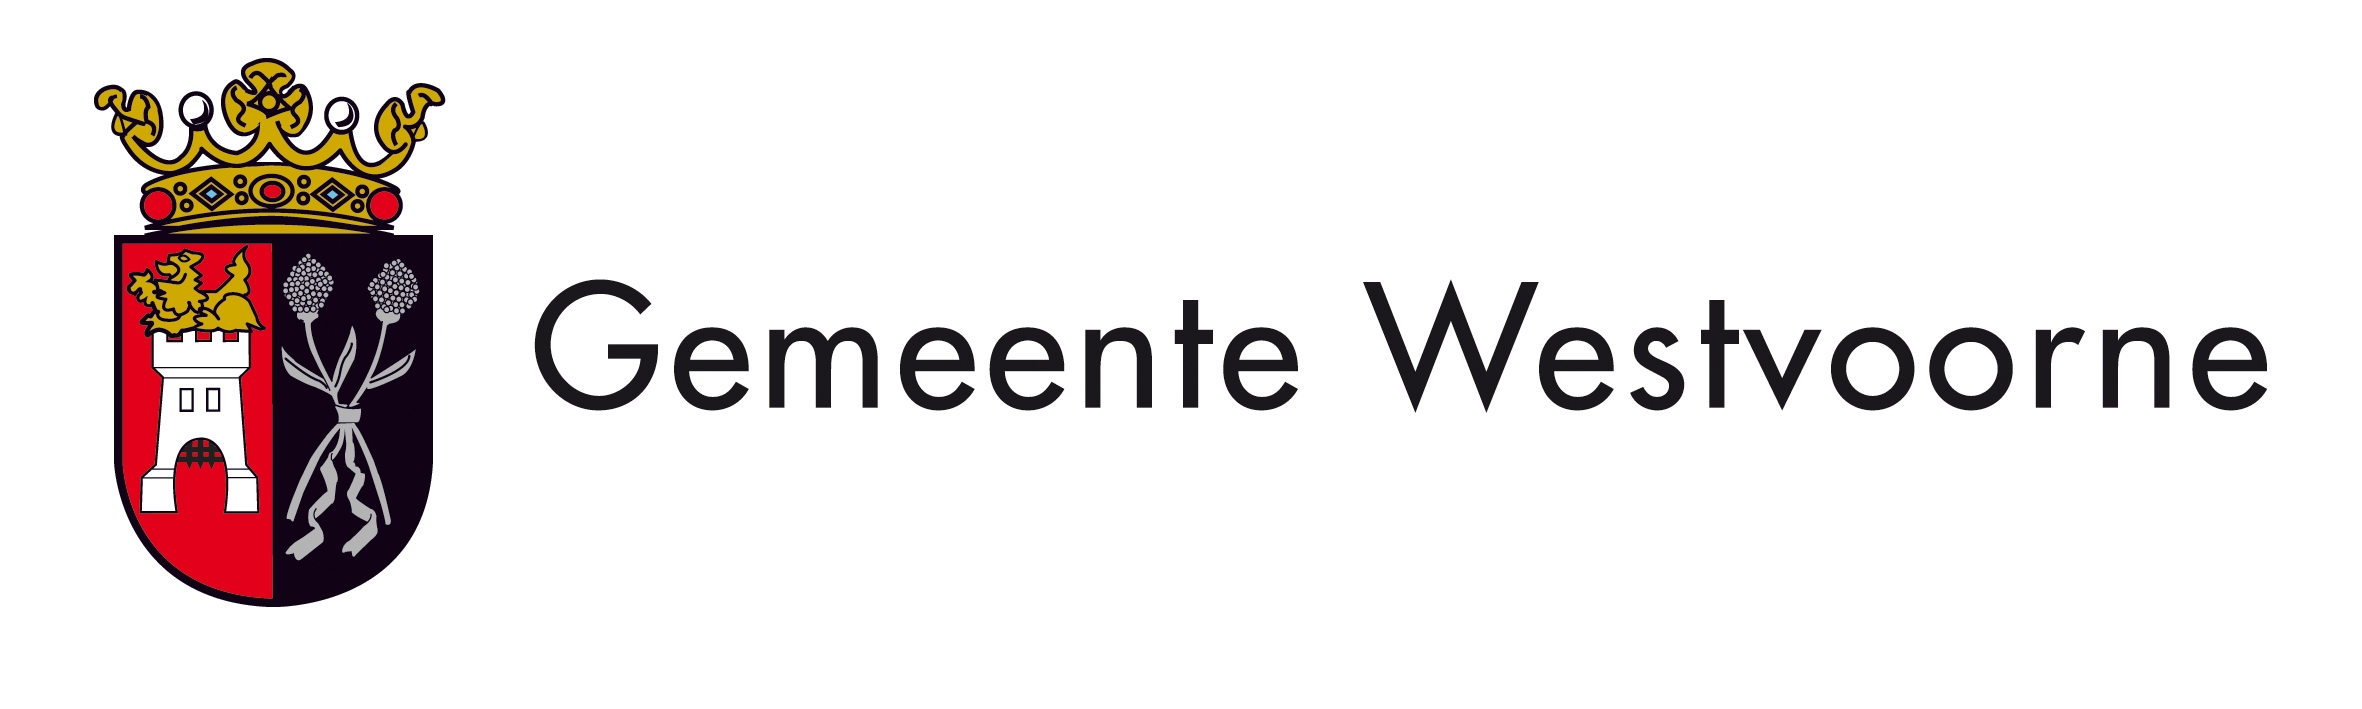 Logo Westvoorne